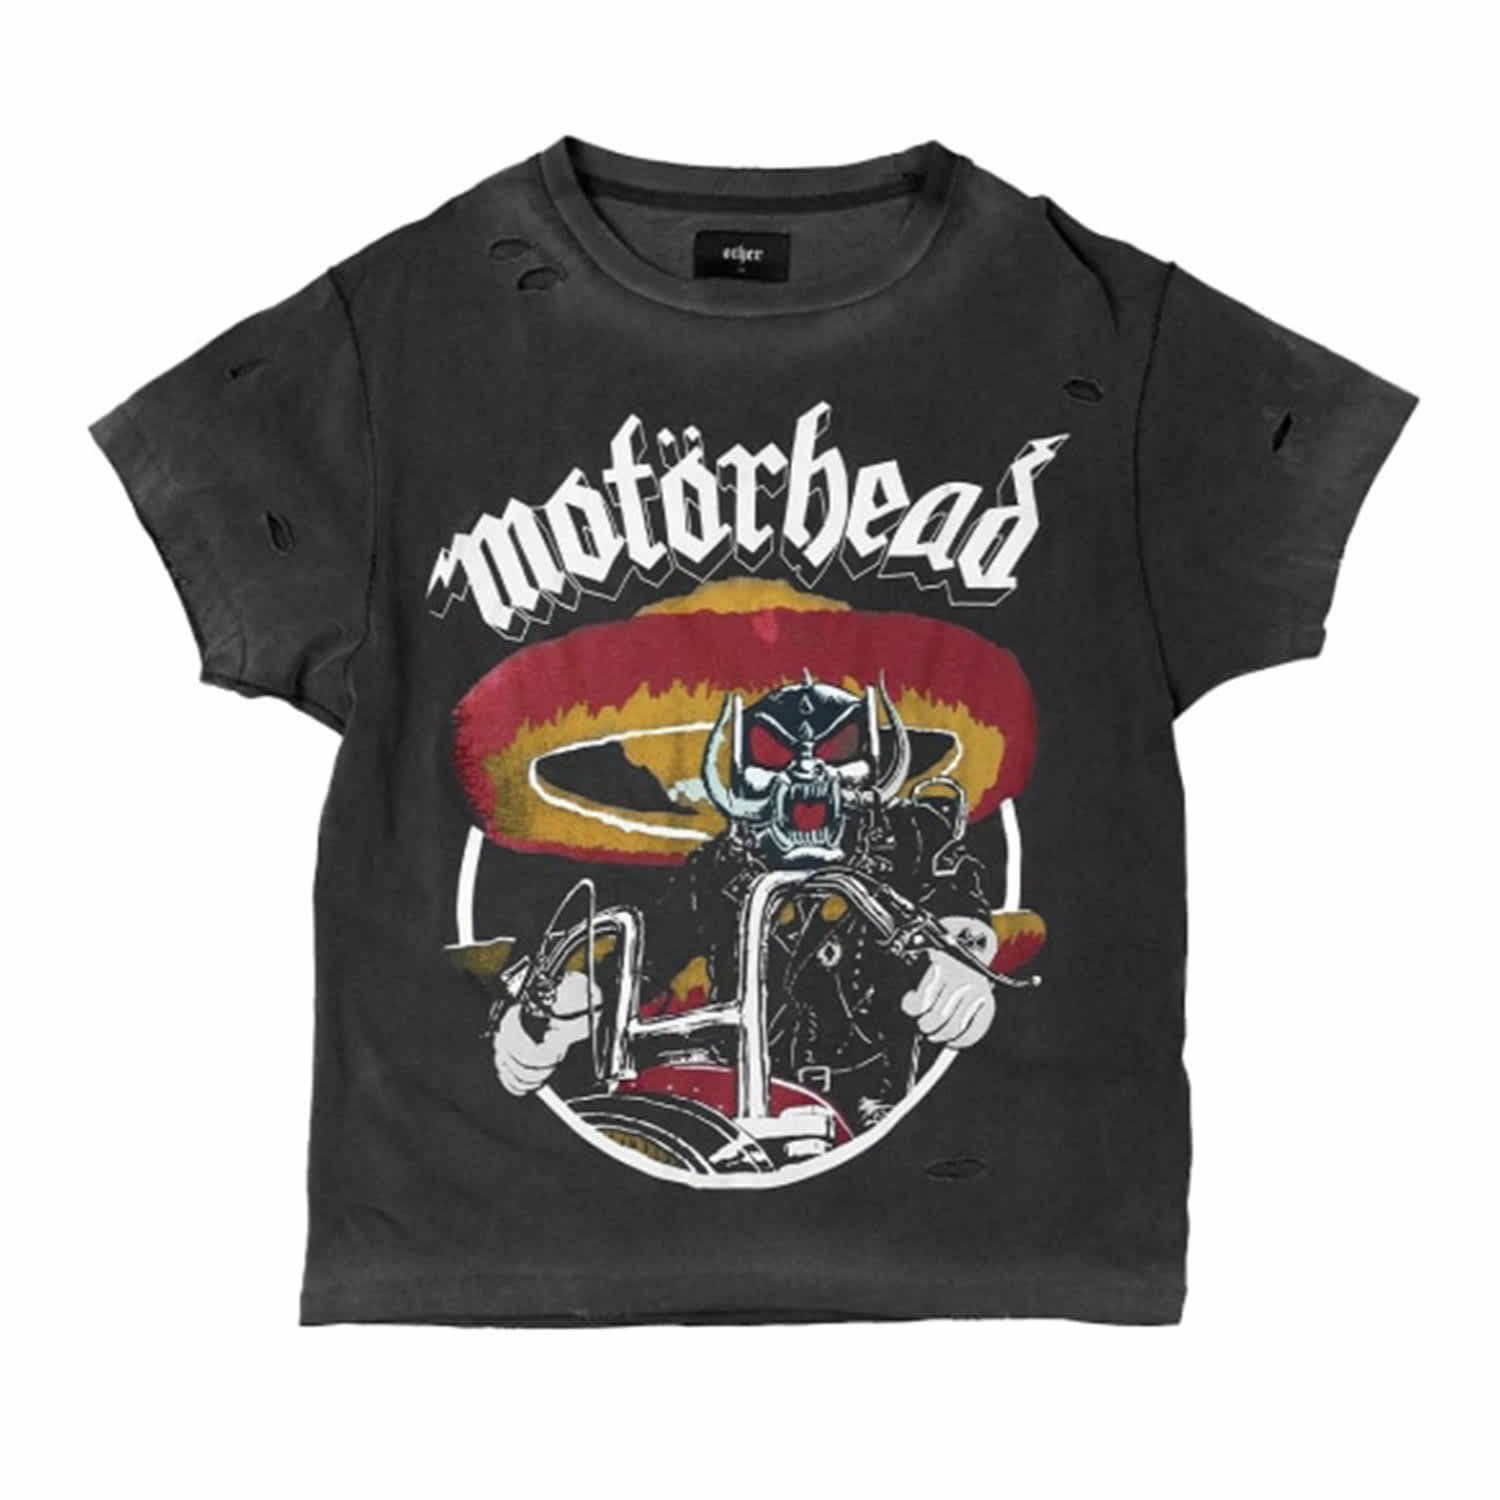 Motorhead - Eighties Biker - Vintage Band T-Shirt - Black by Other